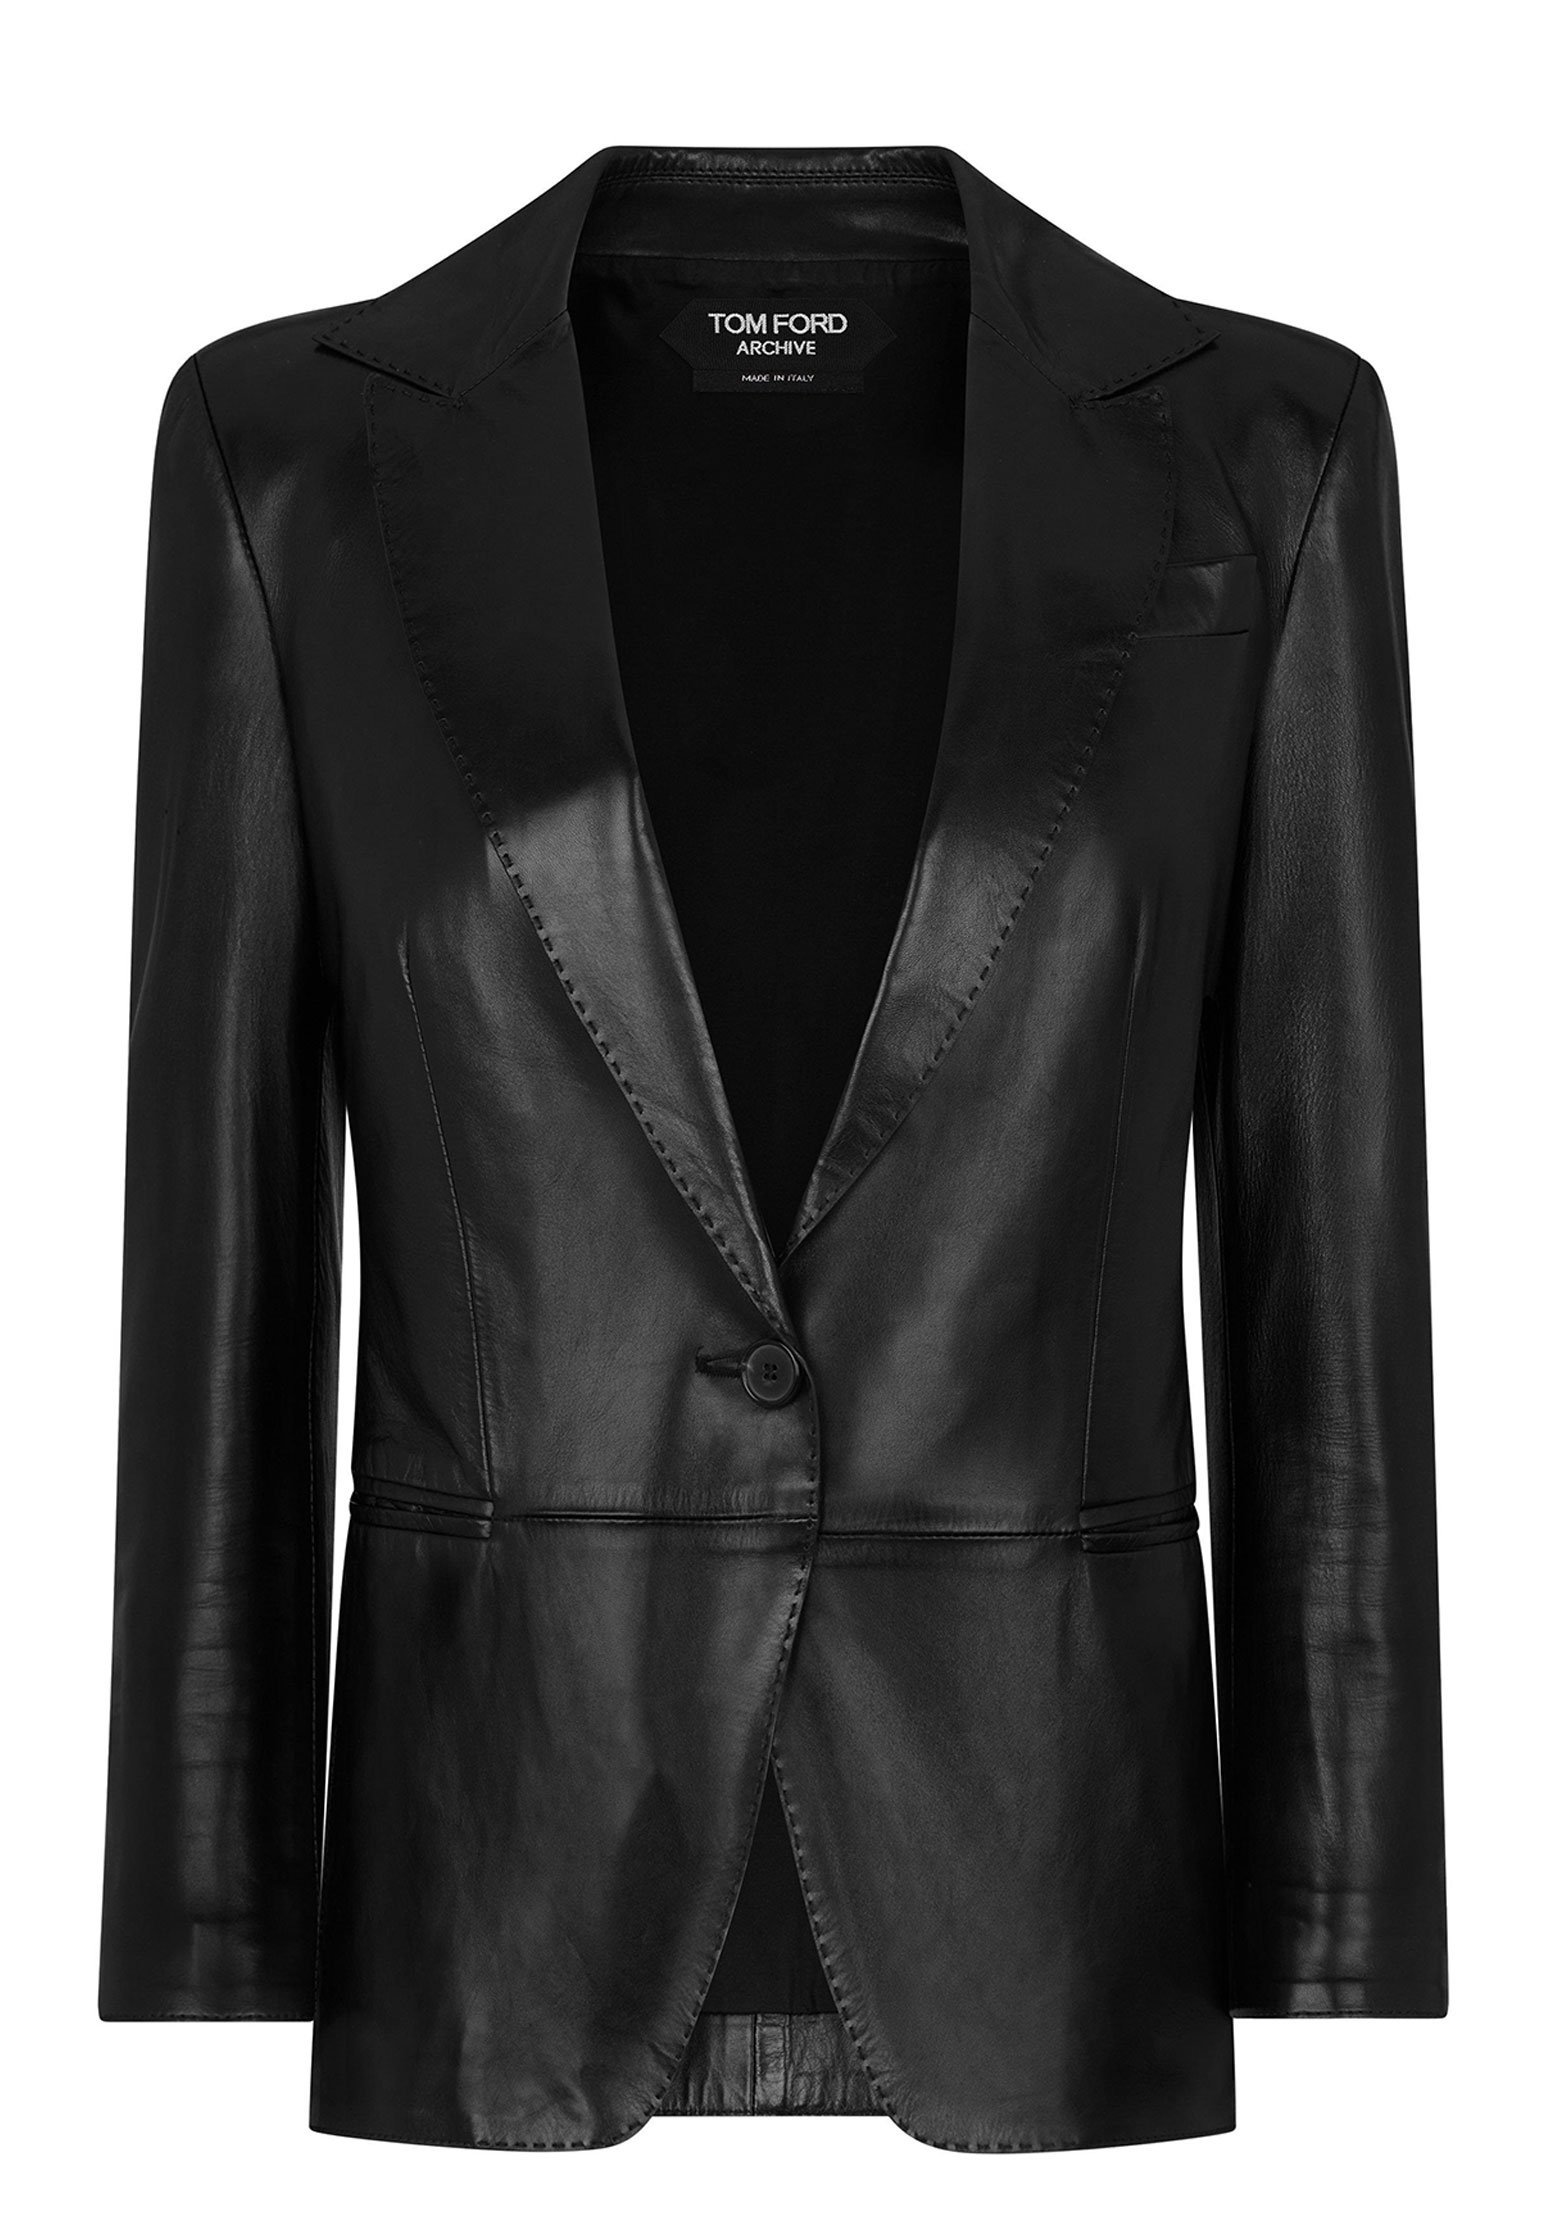 Jacket TOM FORD Color: black (Code: 2958) in online store Allure